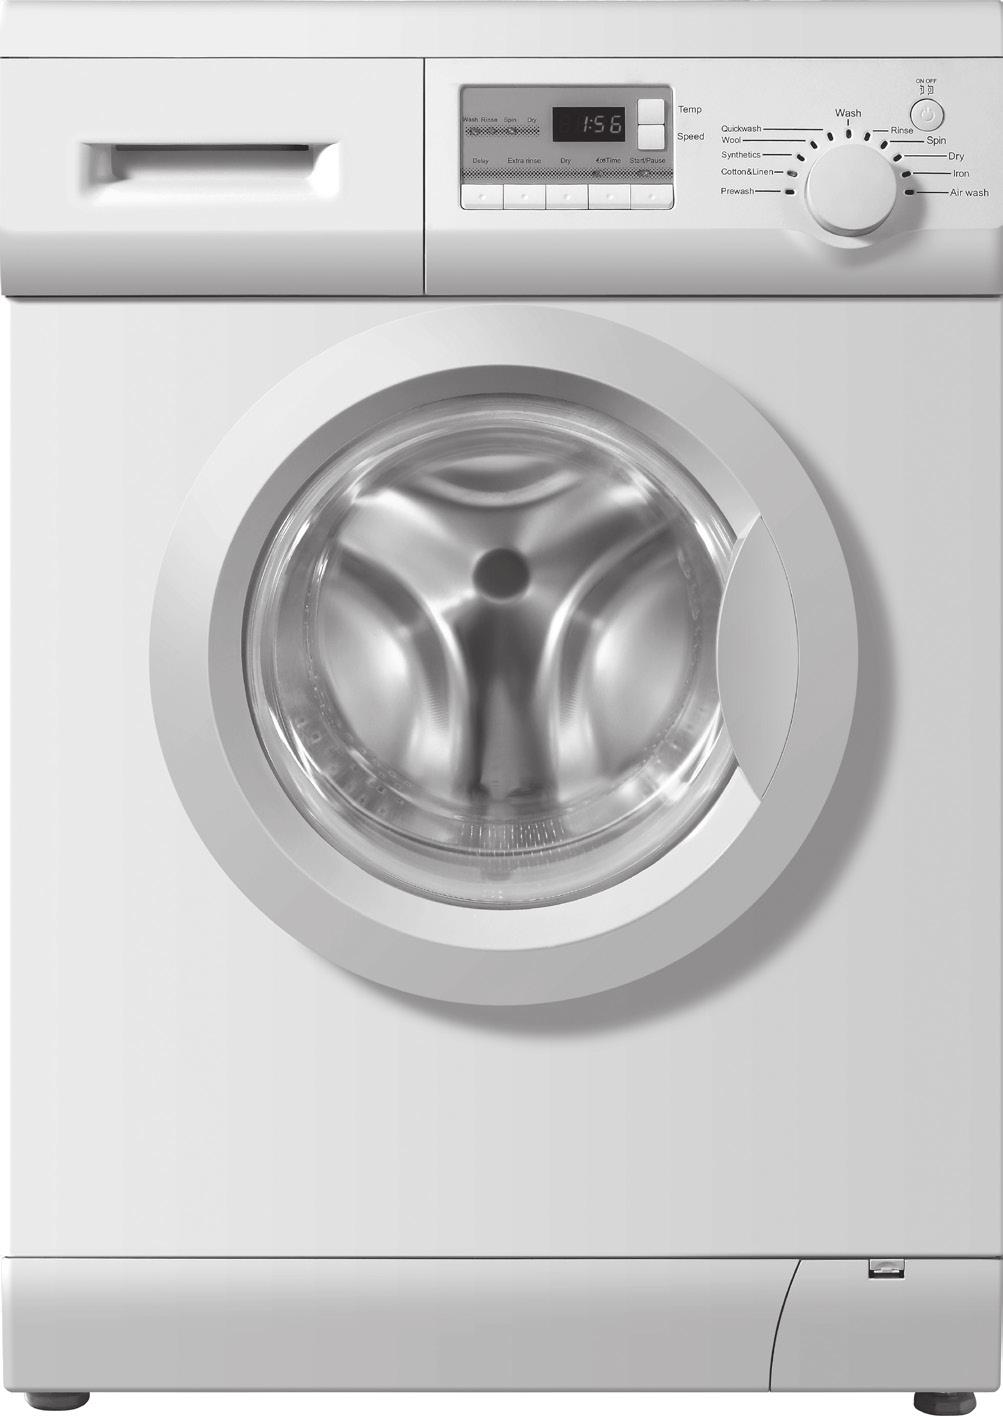 Washer Dryer Installation Guide /